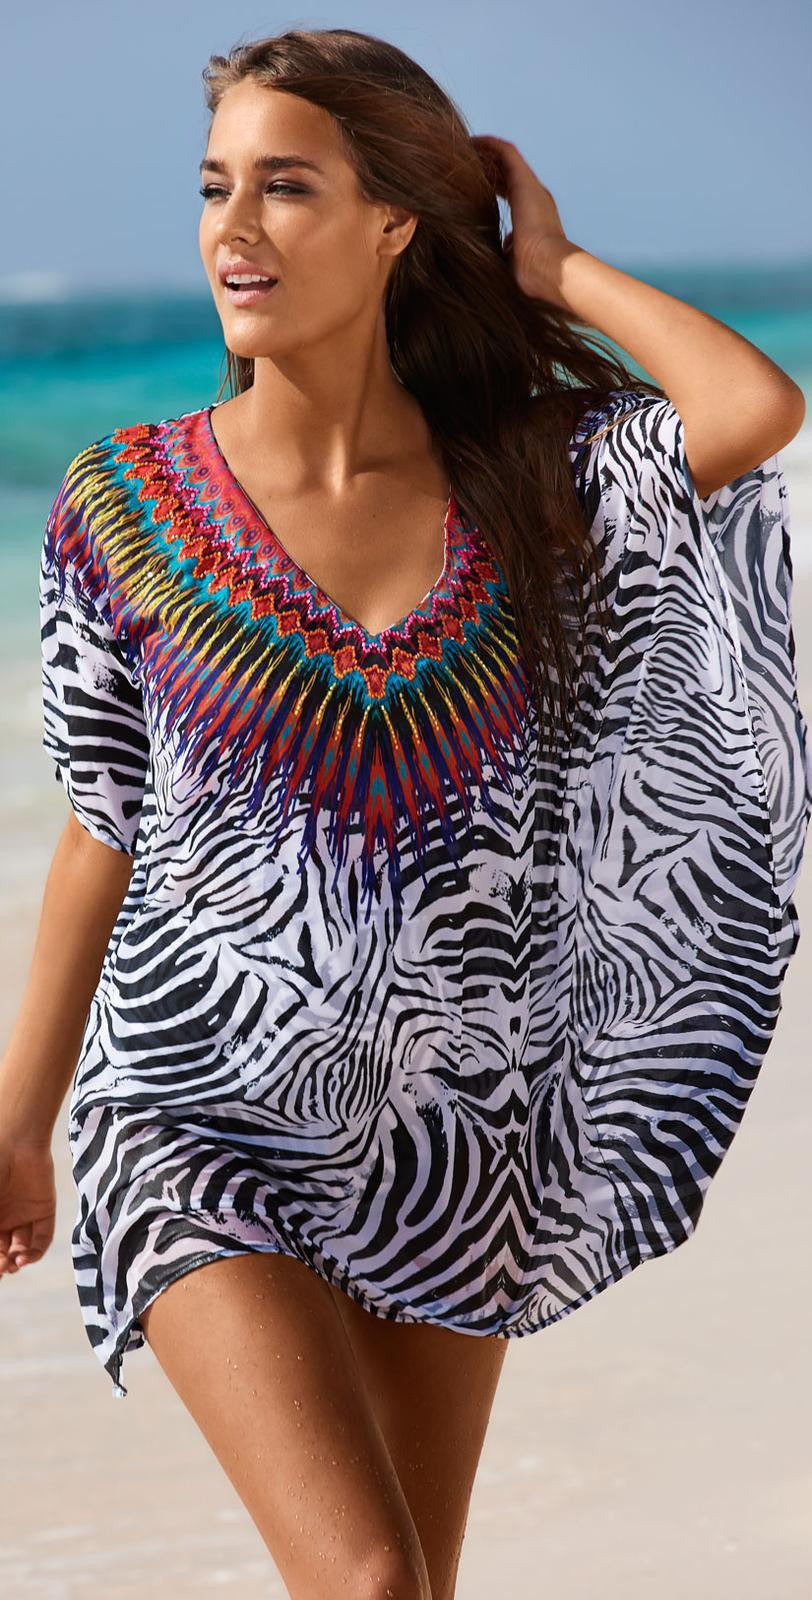 Sexy Zebra-Stripe Printed Bikini Beach Cover Up Dress